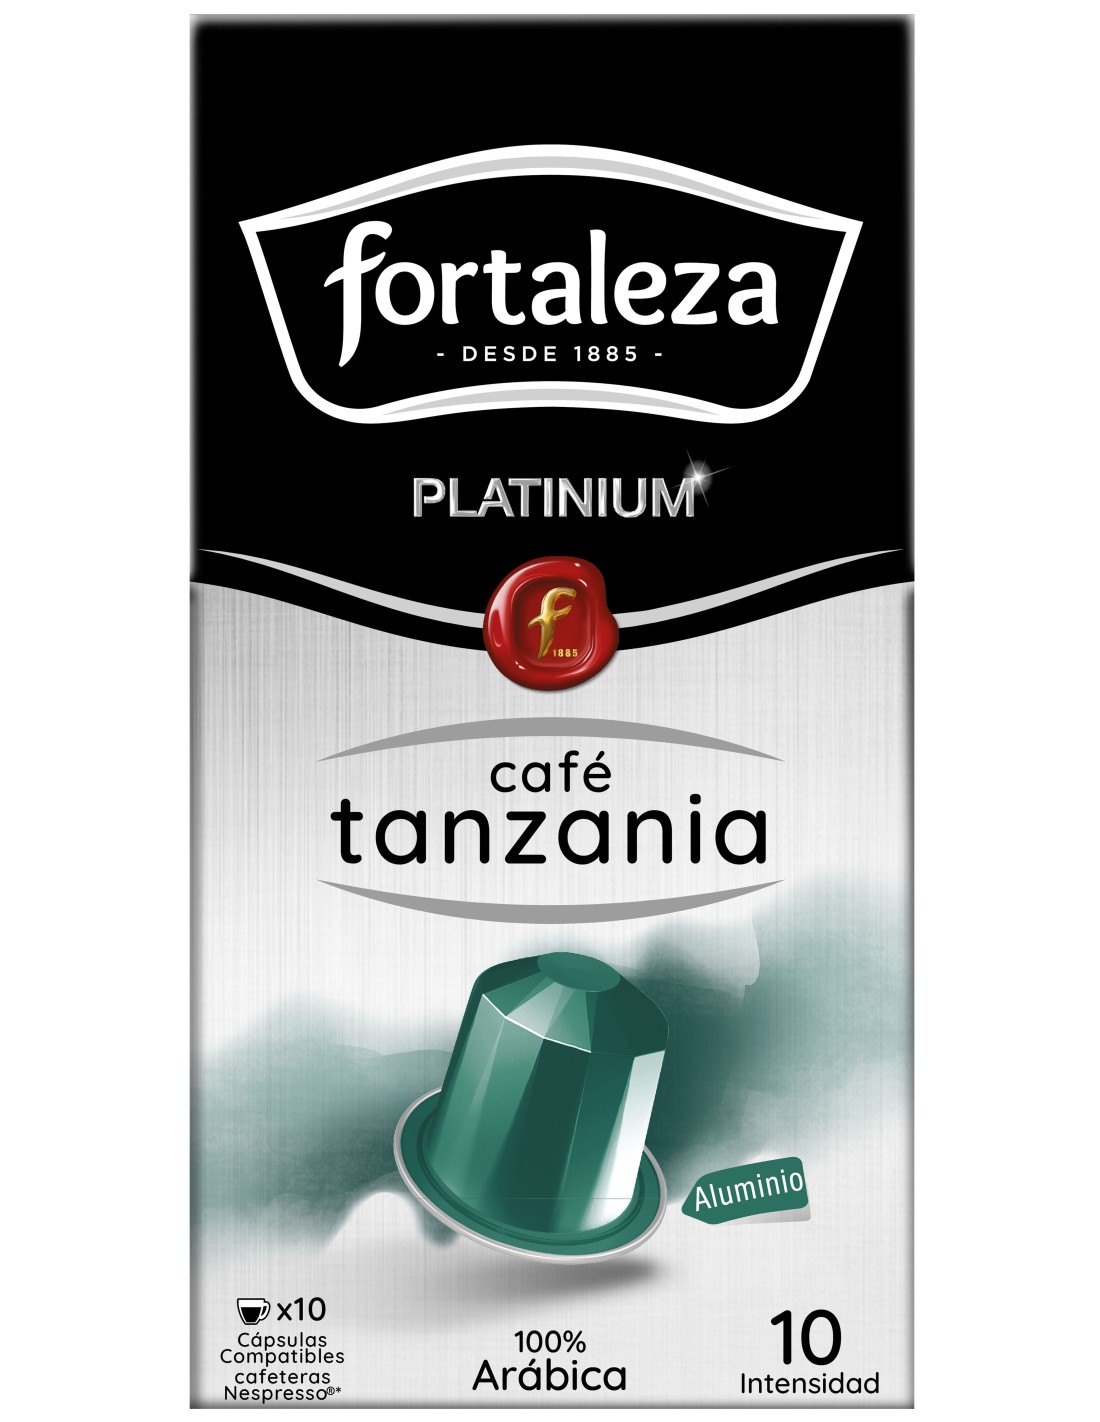 Café Tanzania 10 cápsulas Fortaleza Platinium compatibles con Nespresso®